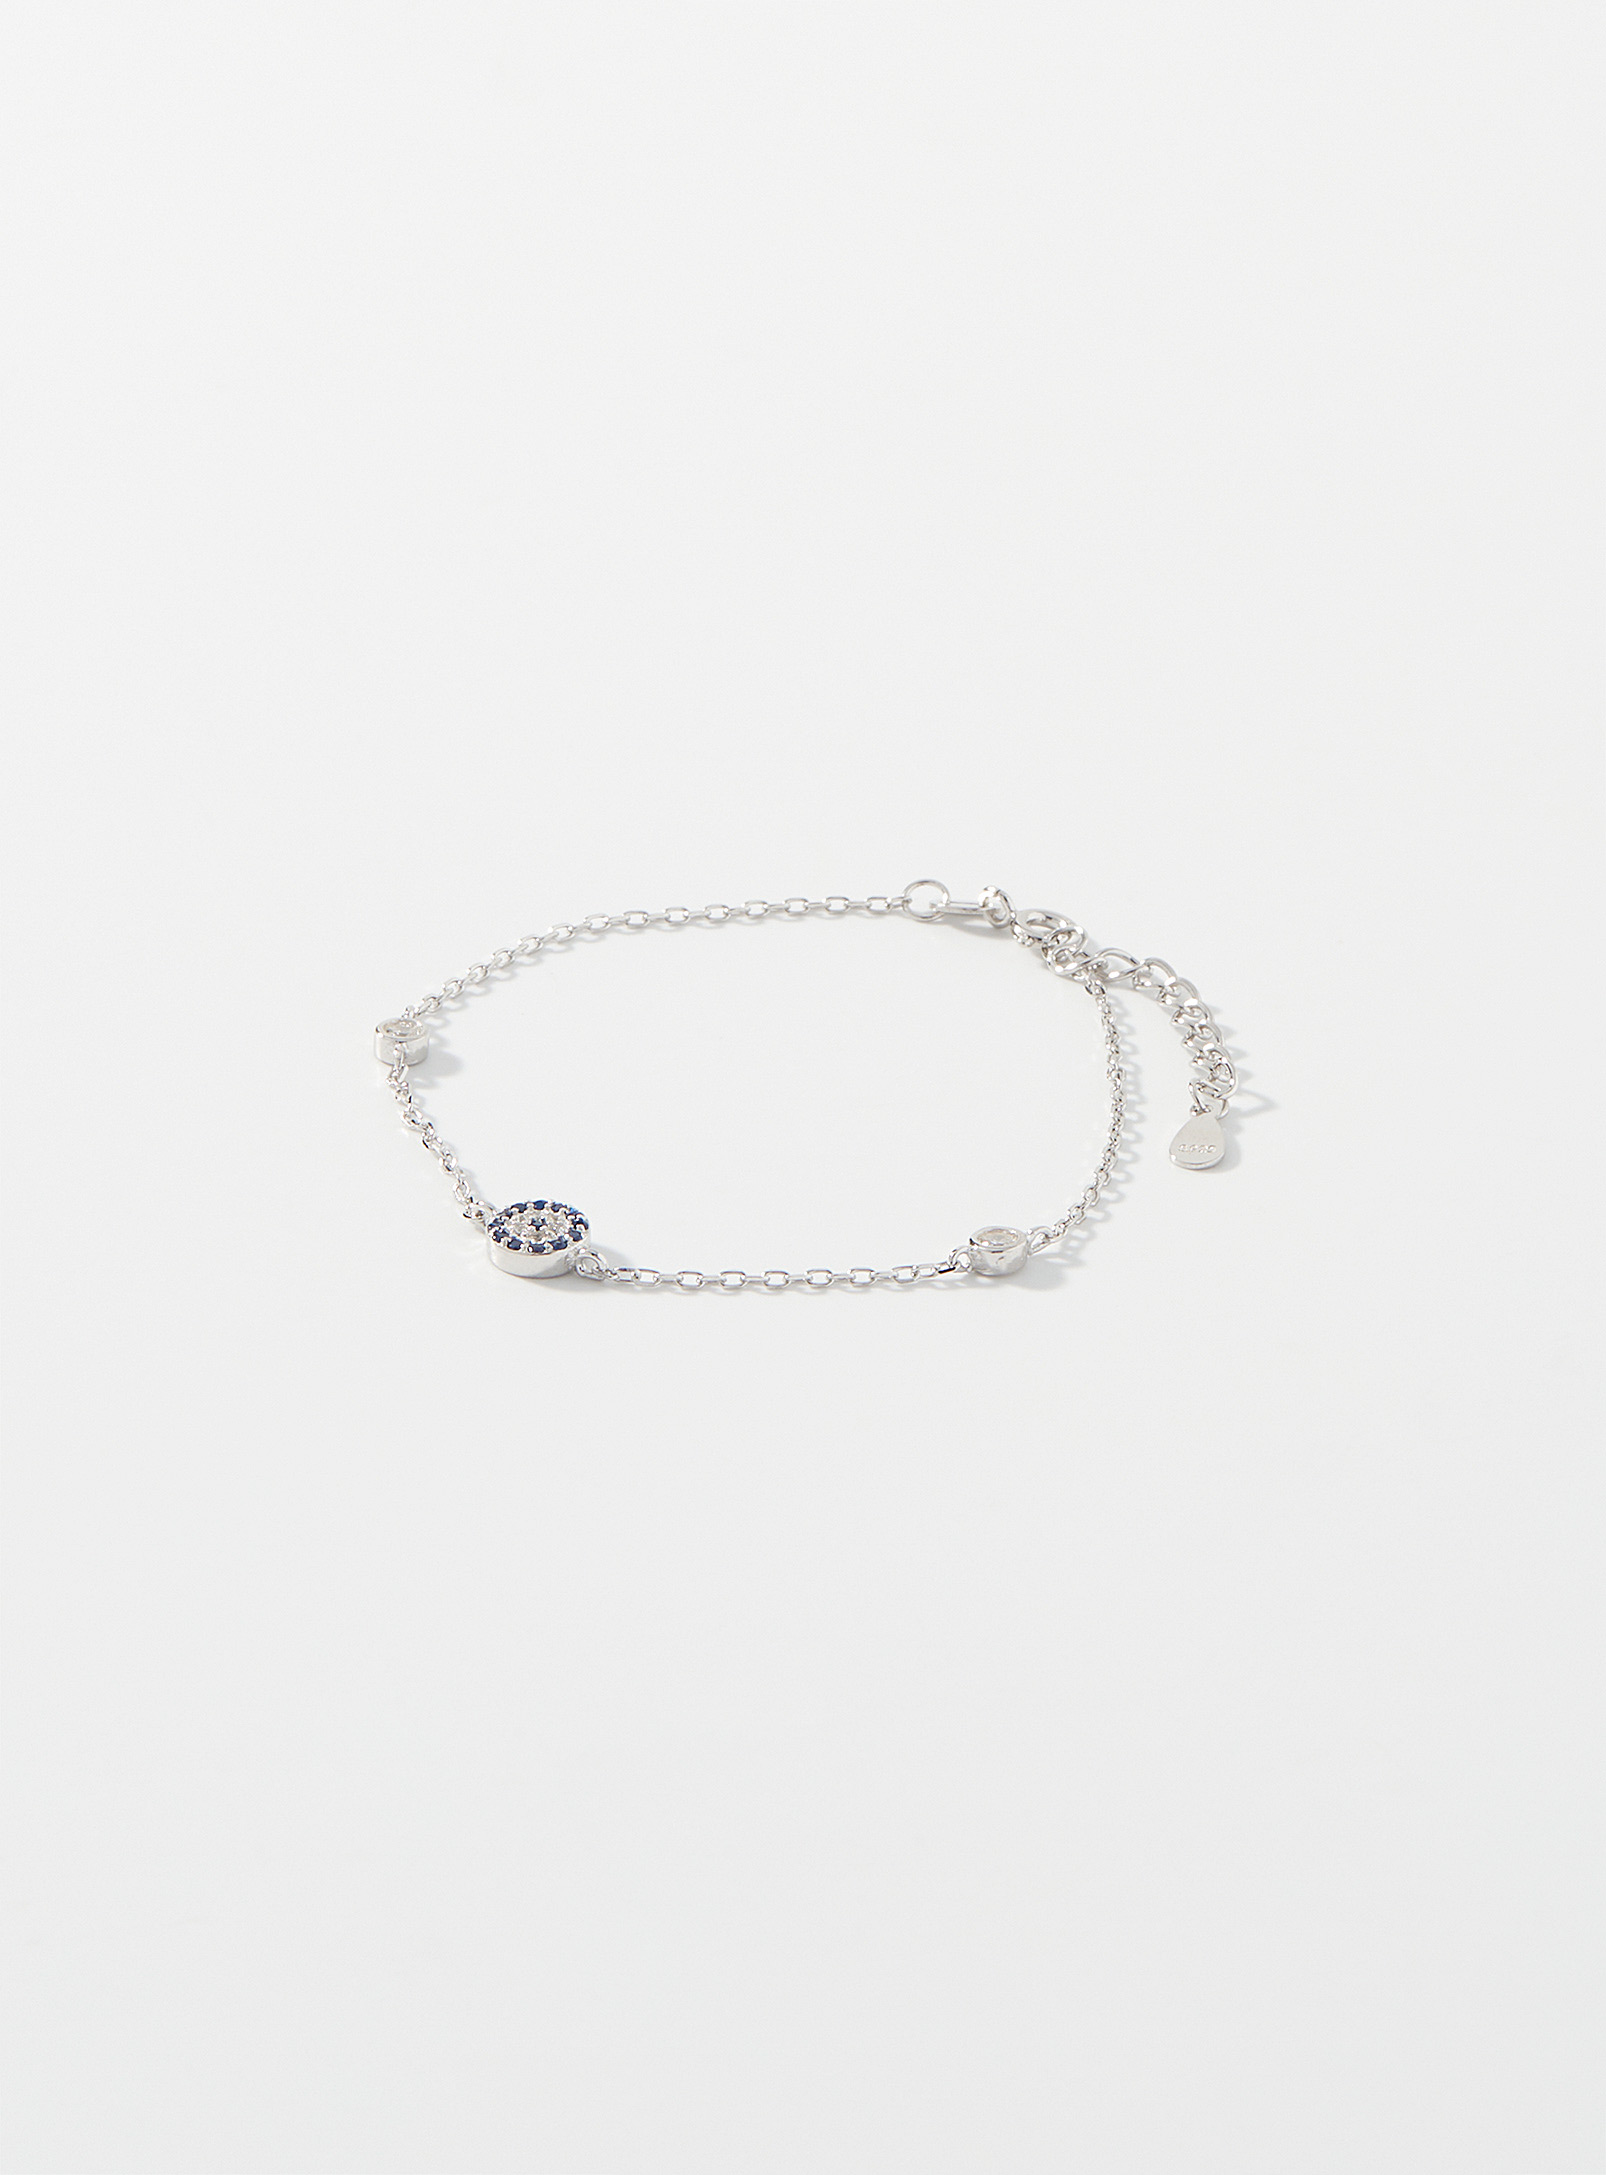 Simons - Women's Royal blue stone bracelet